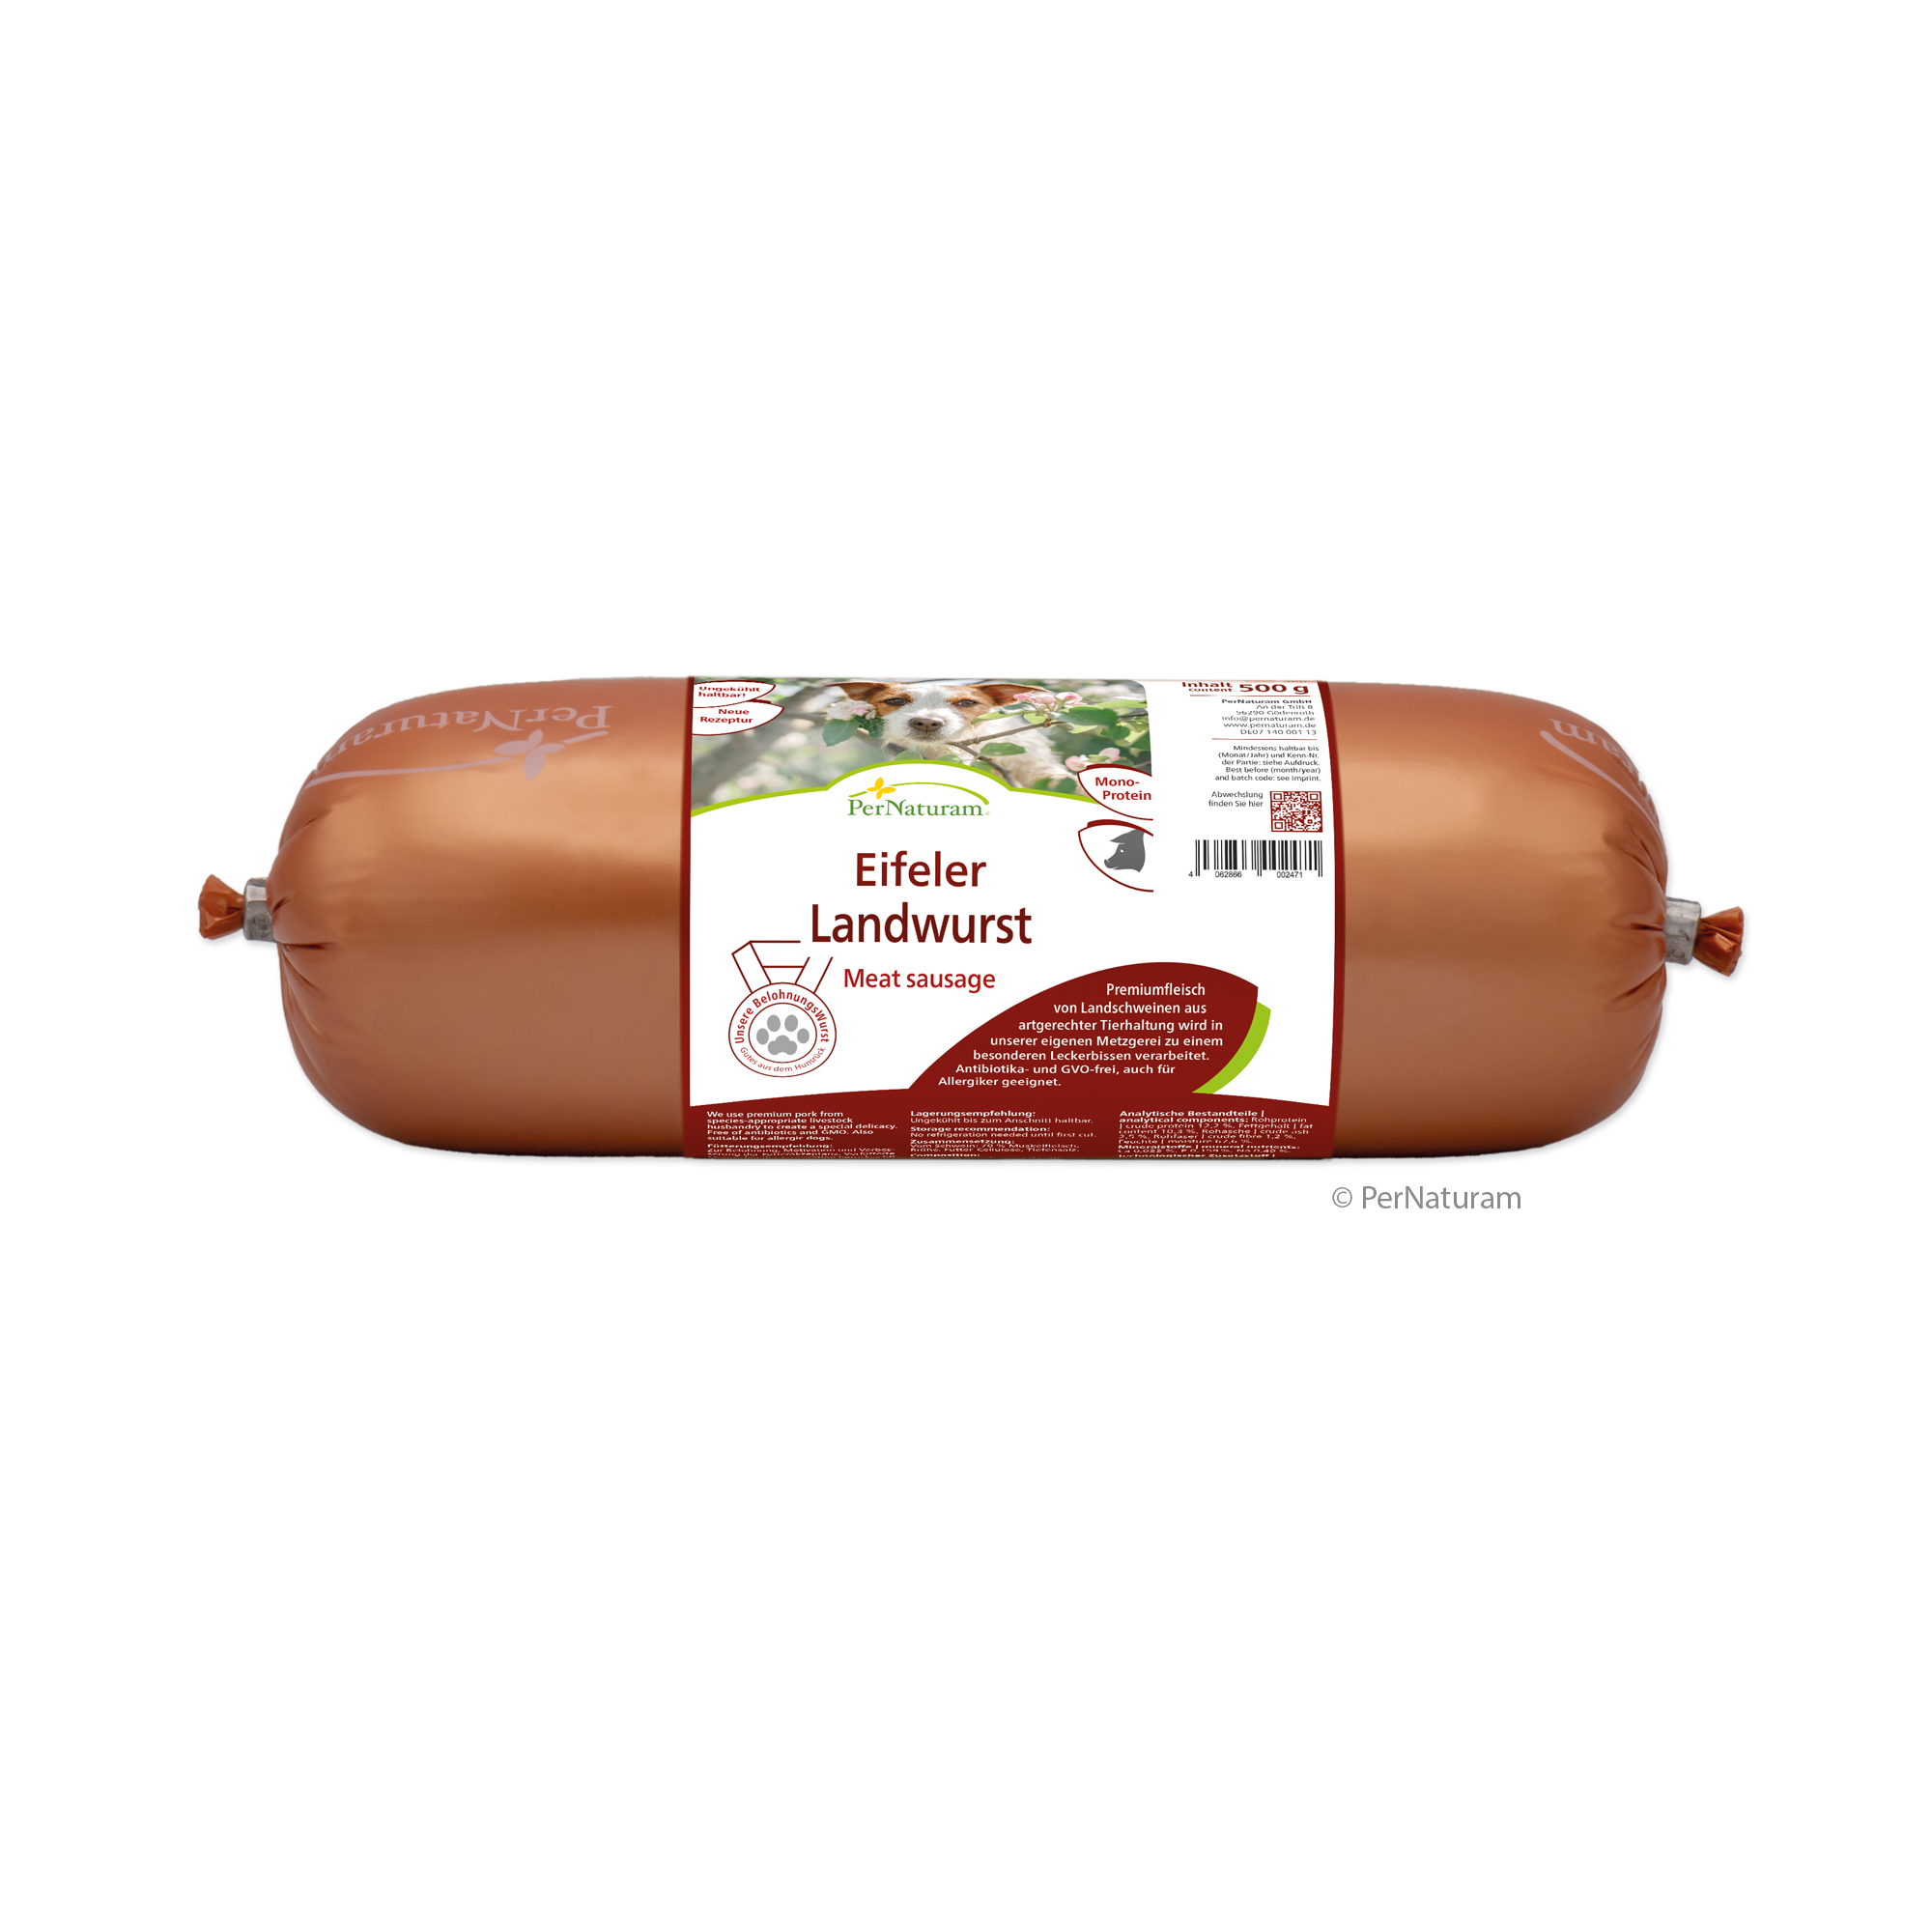 PerNaturam® Eifeler Landwurst